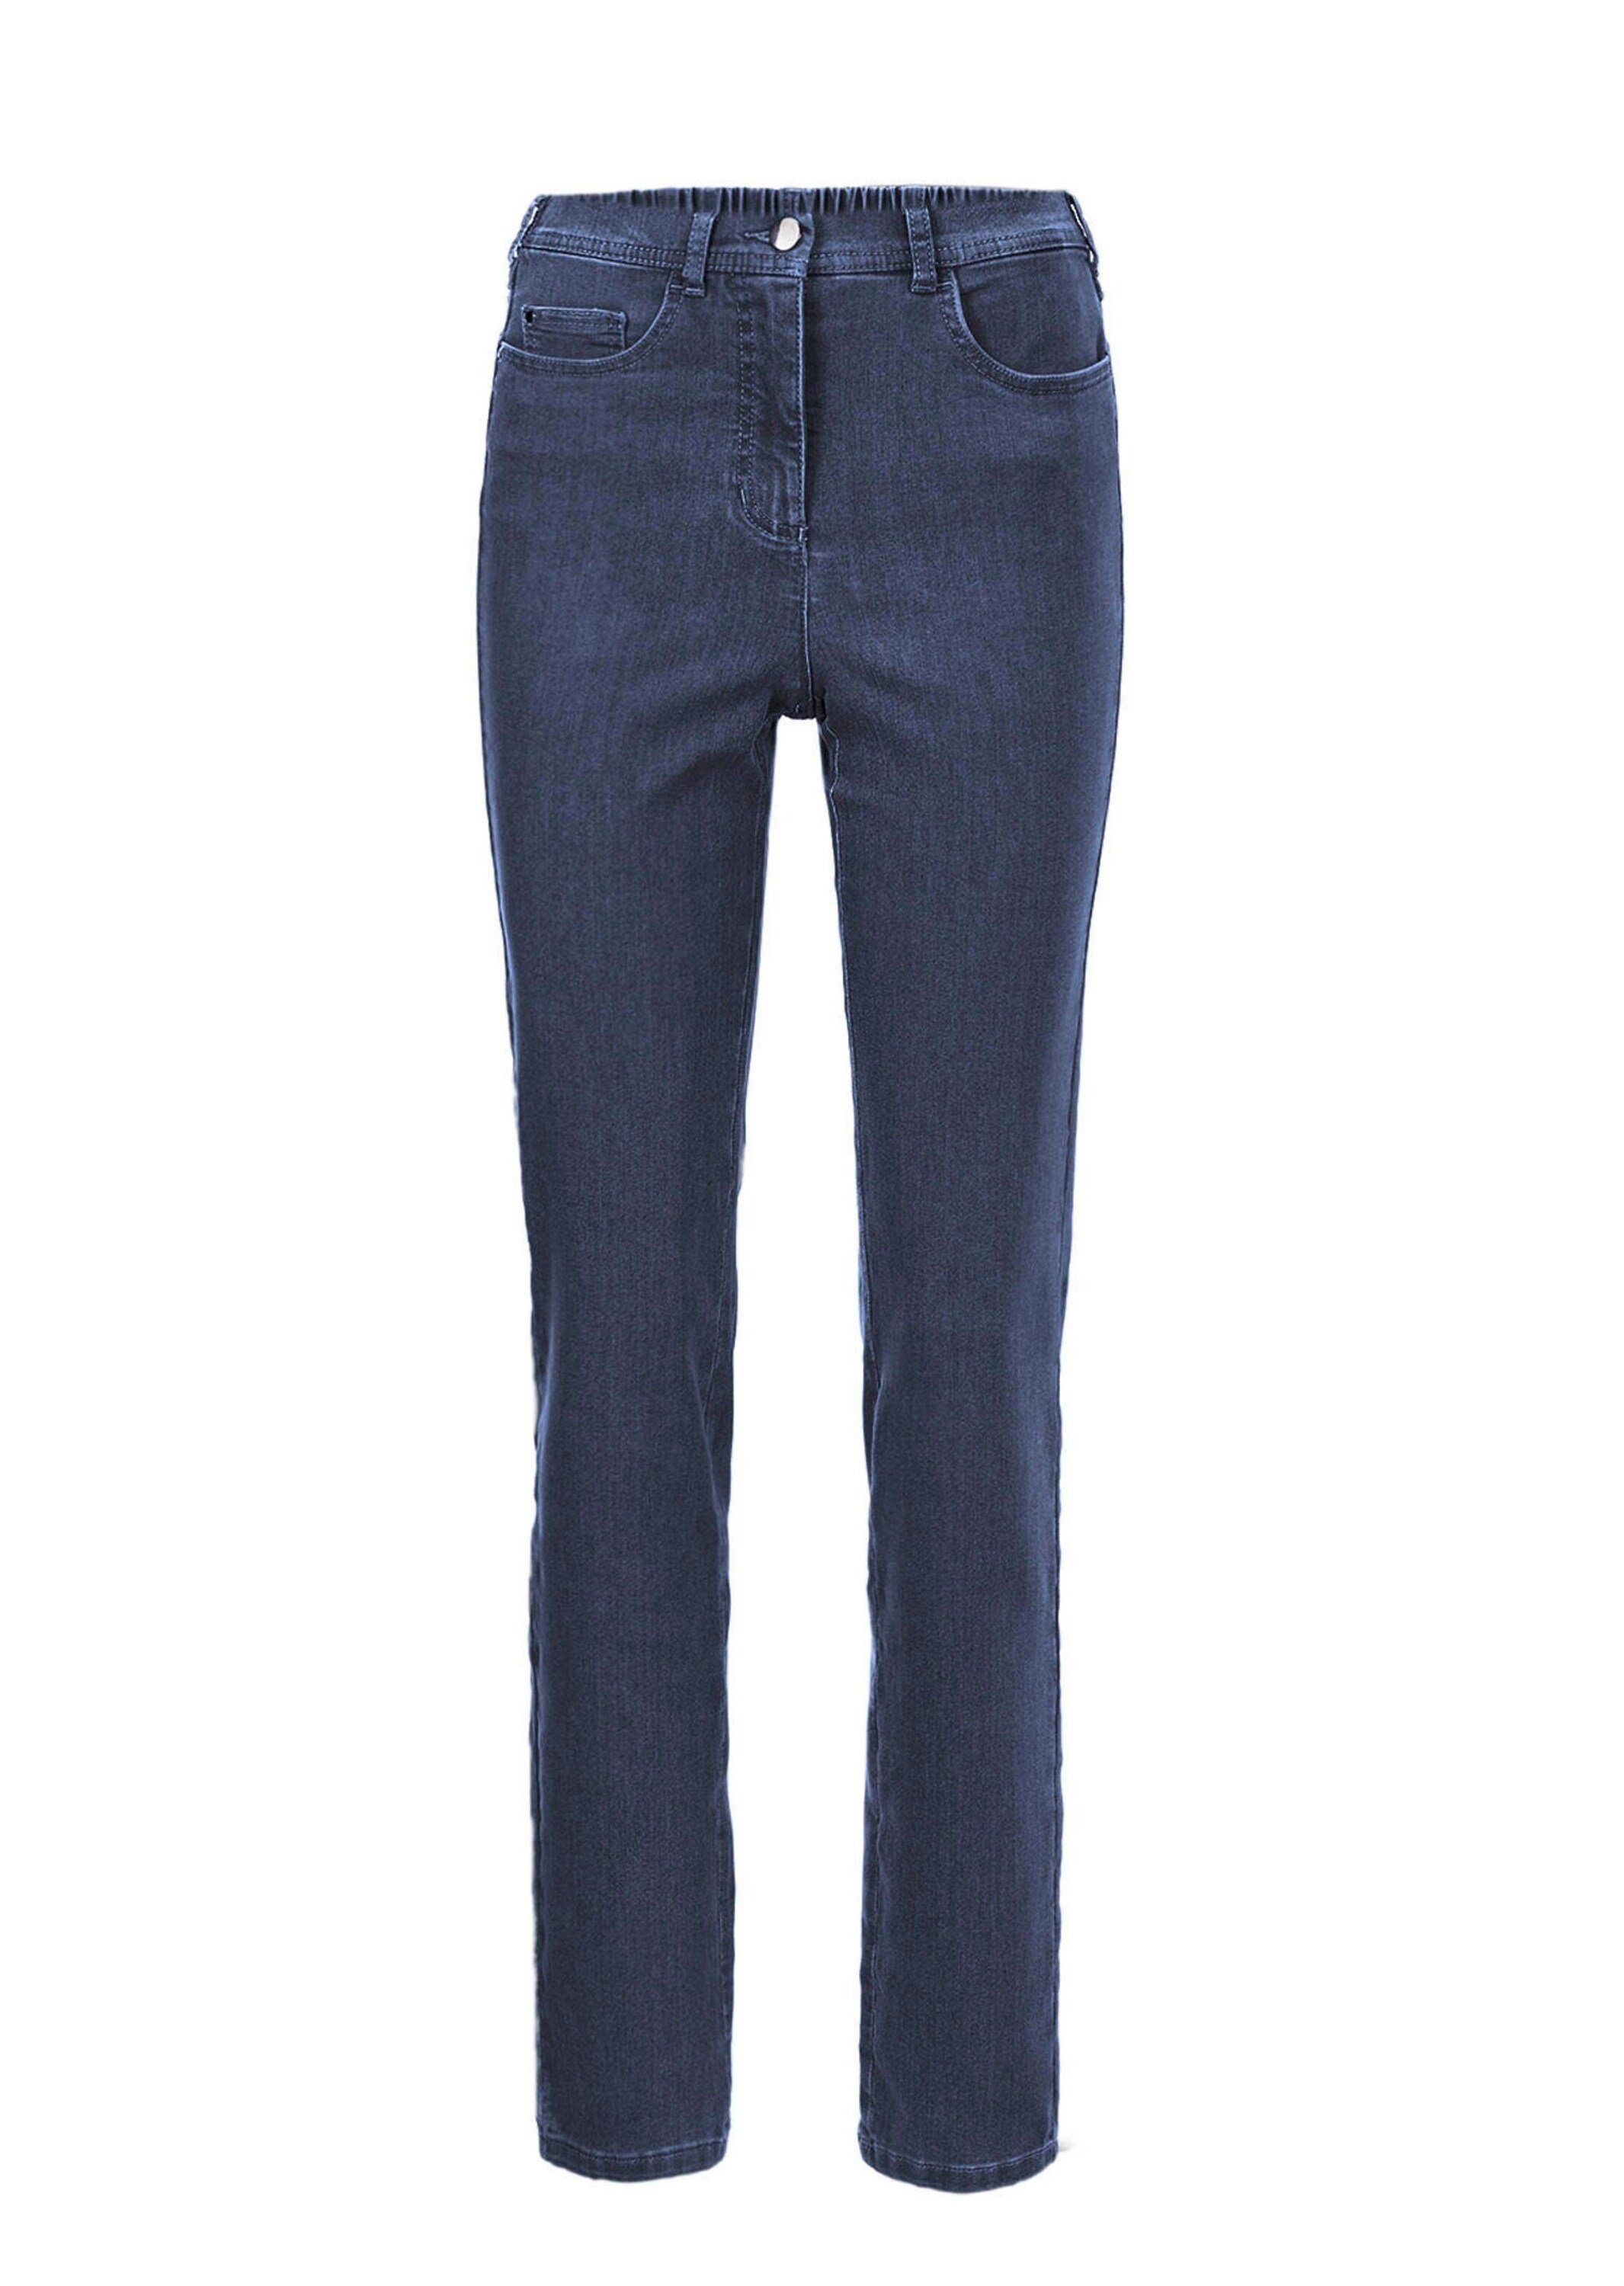 GOLDNER High-Stretch-Jeanshose Bequeme Bequeme Kurzgröße: dunkelblau Jeans